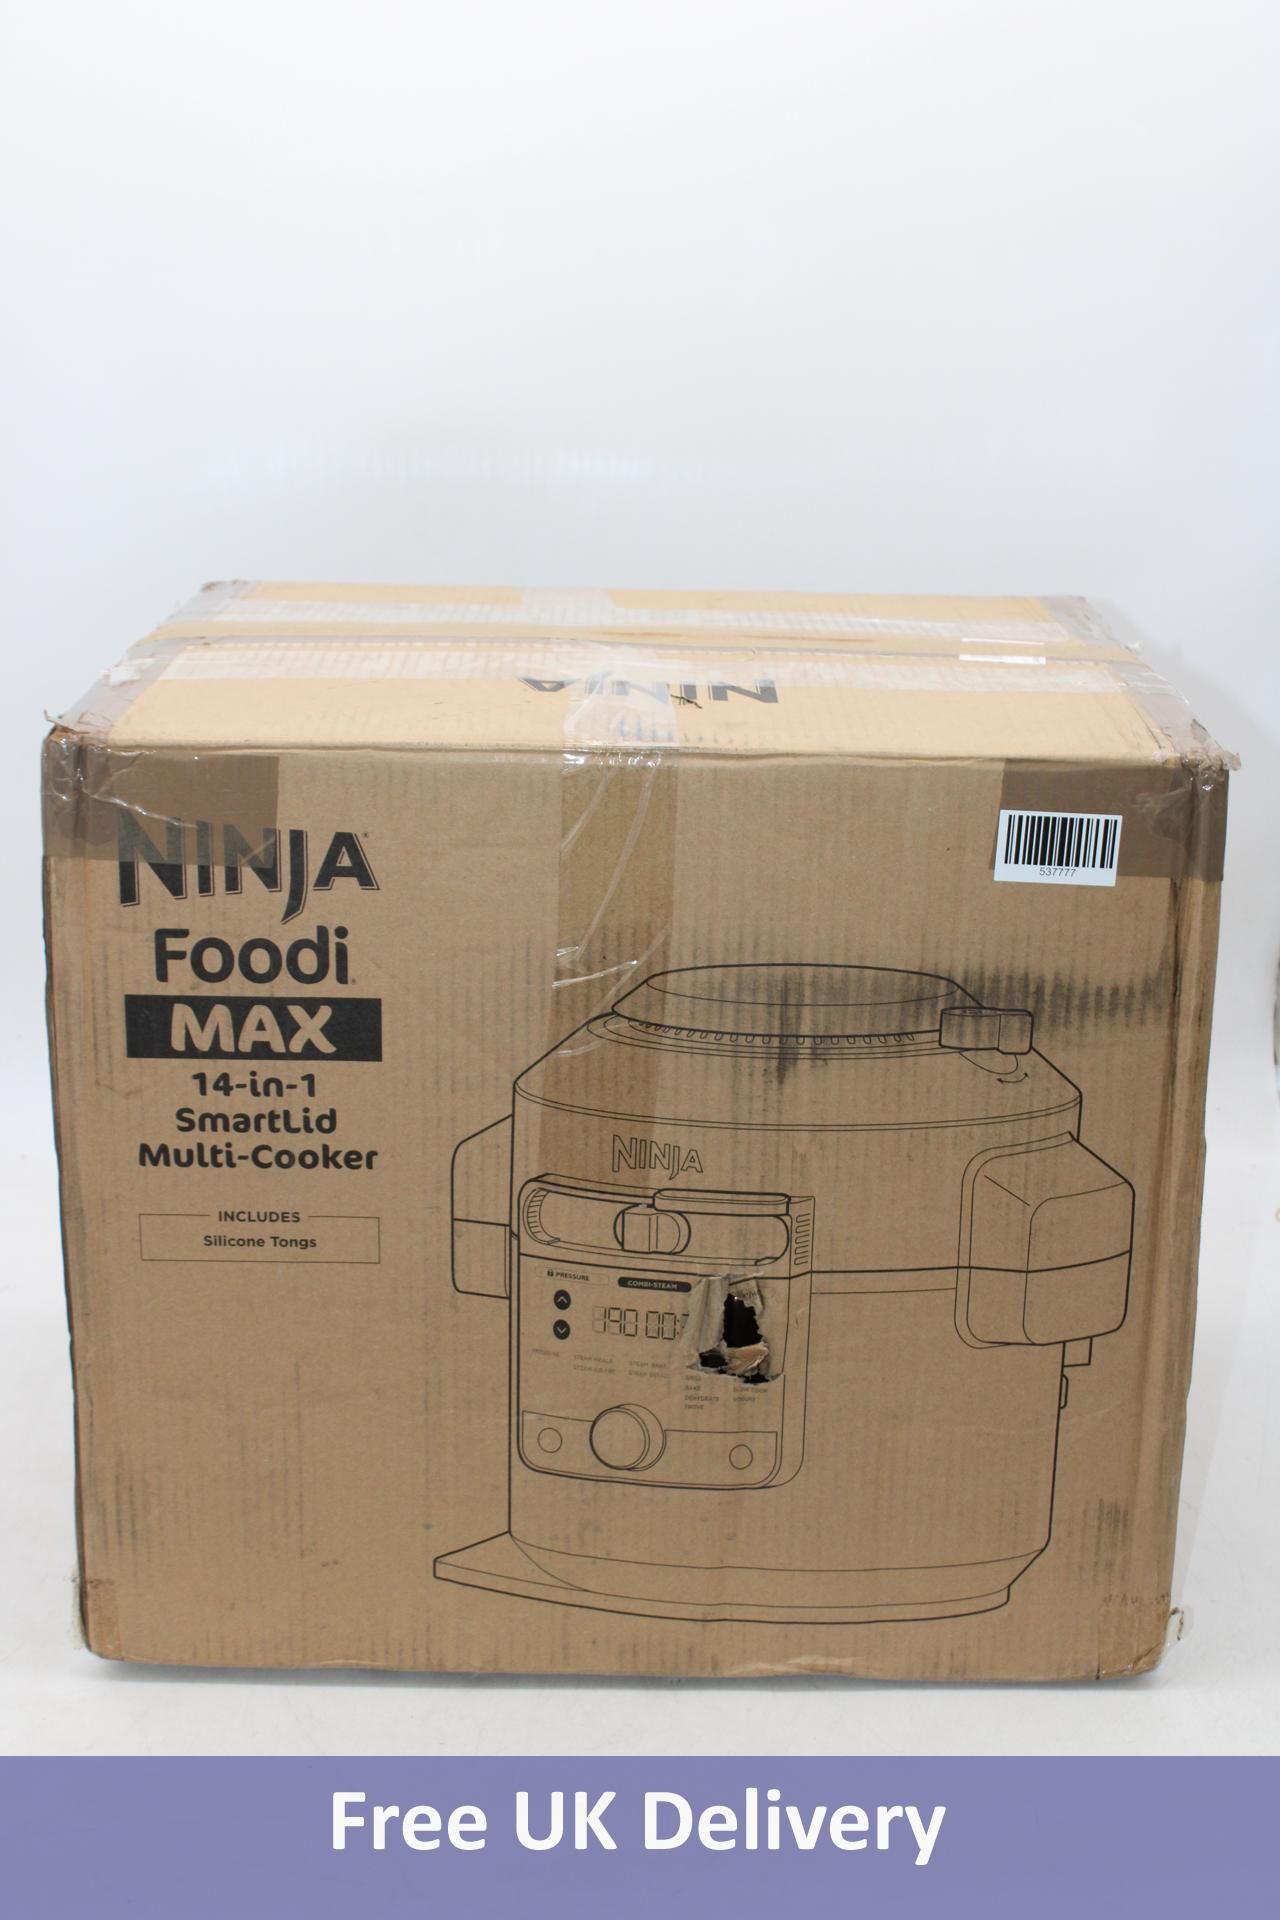 Ninja Foodi Max, 14 in 1 Smart Lid Multi Cooker